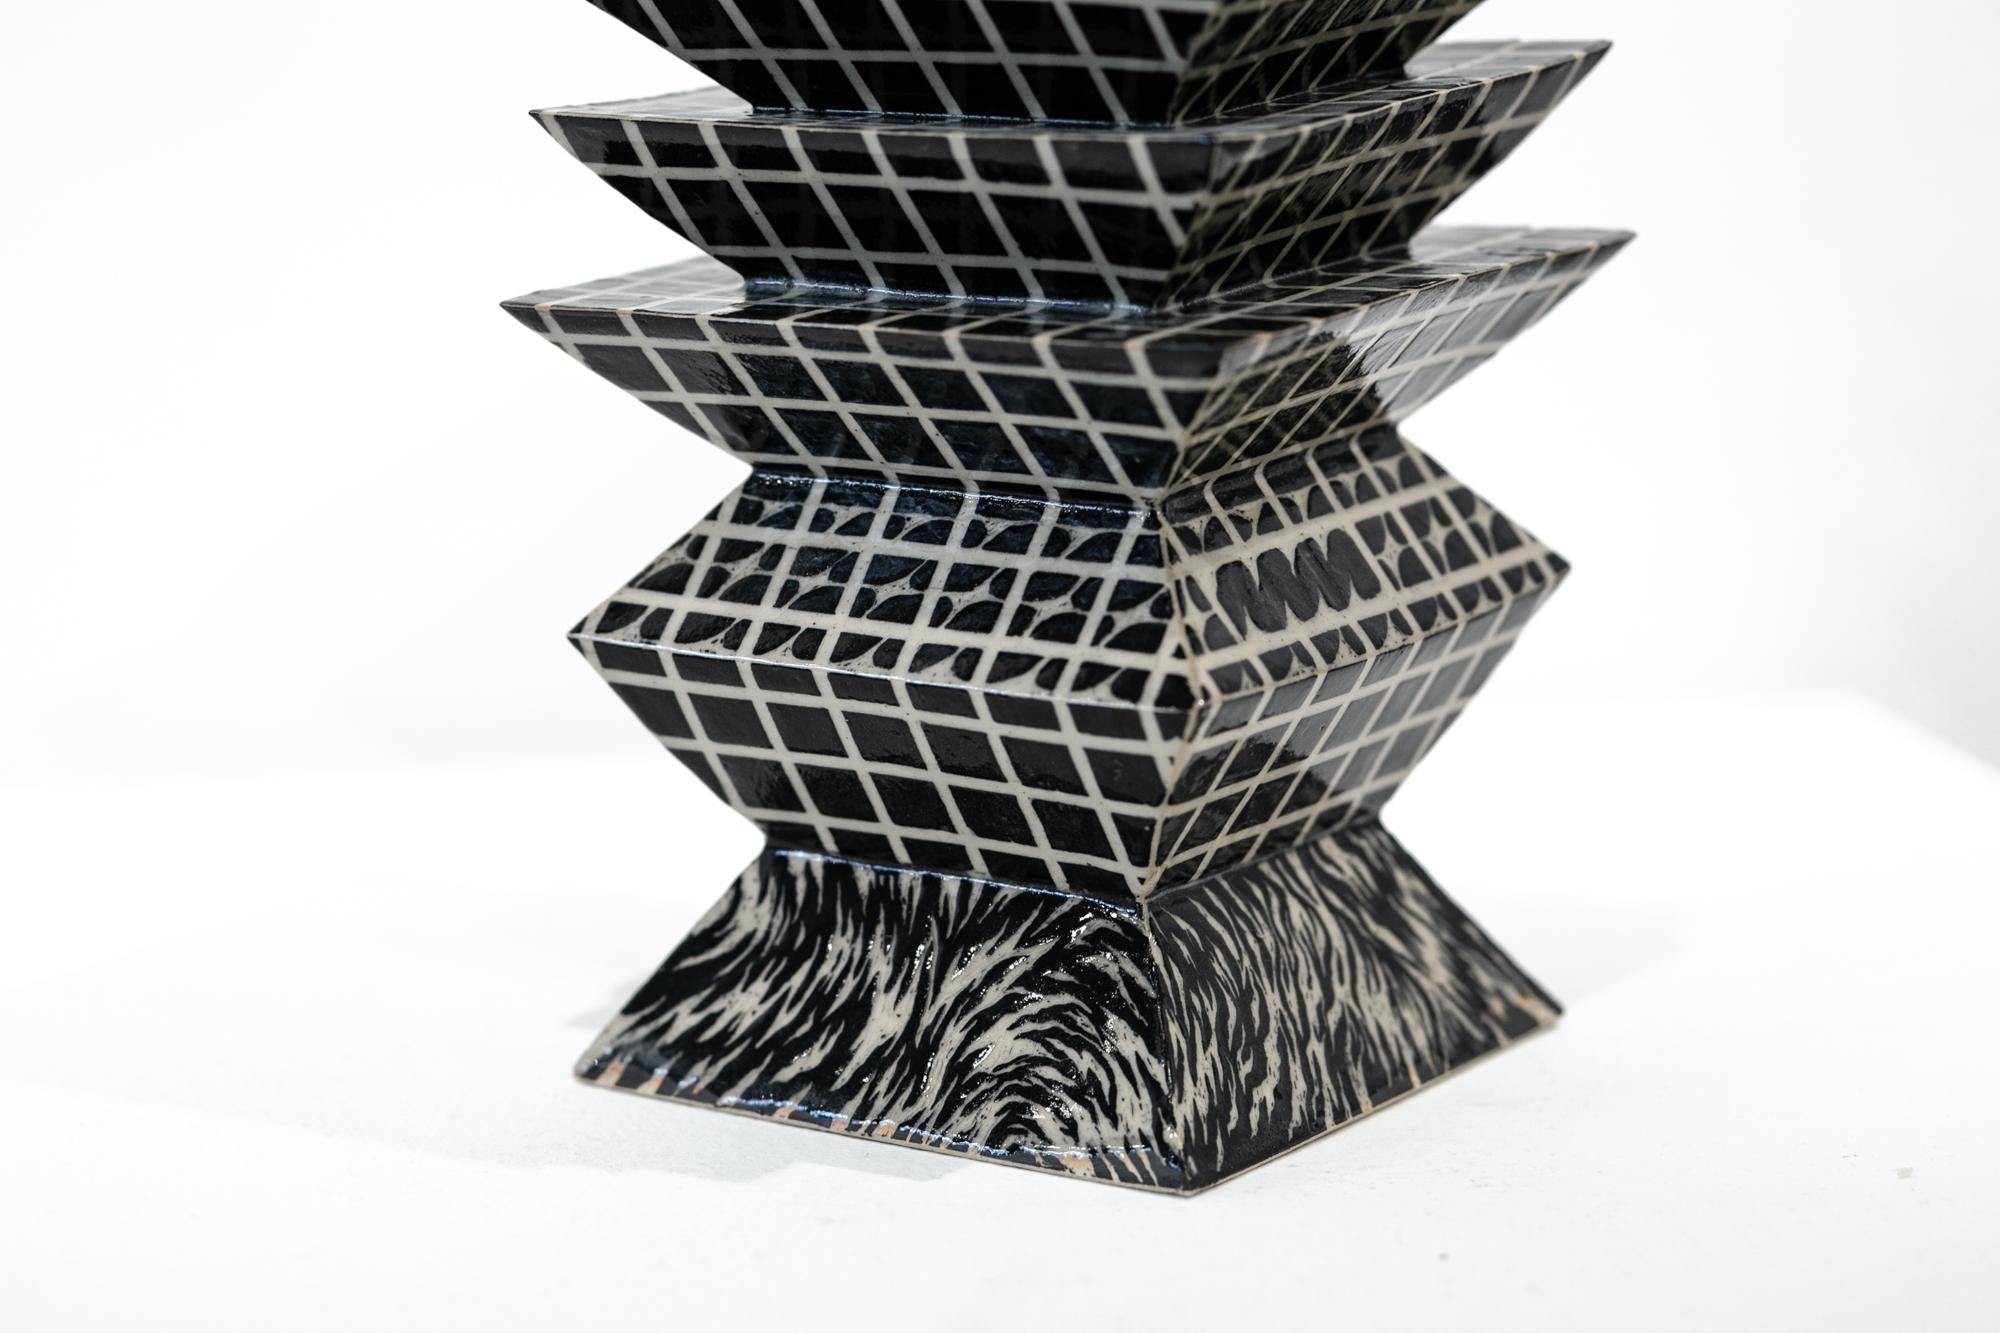 Apprentice's Container - Contemporary Sculpture by Alex Kovacs